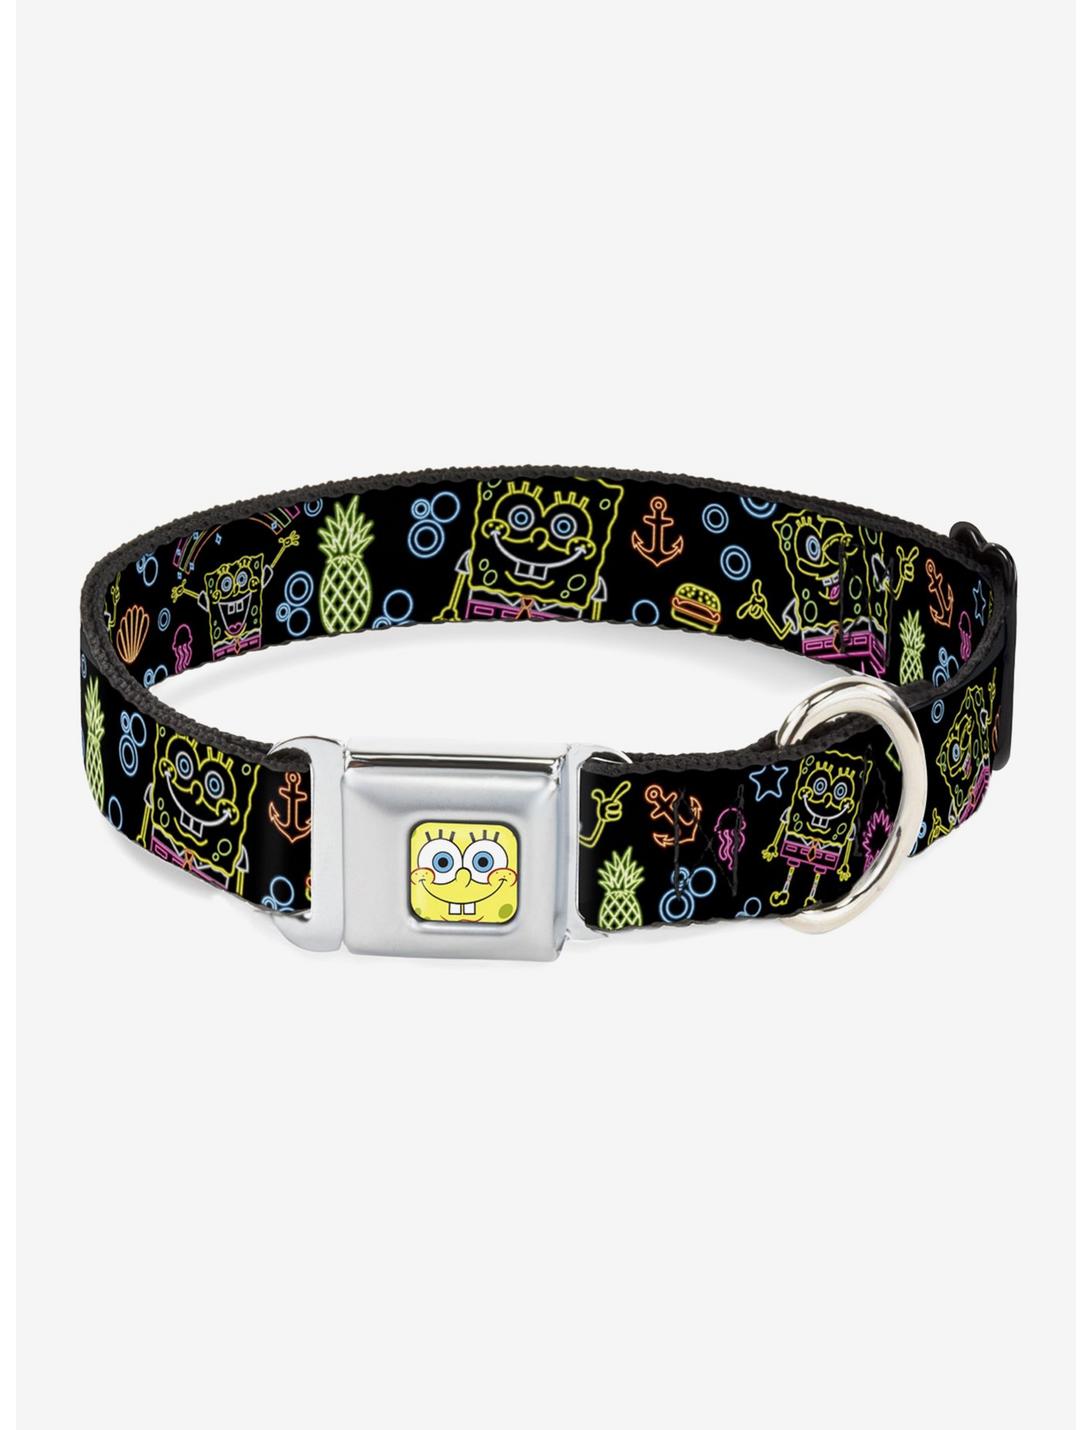 Spongebob Squarepants Electric Poses Dog Collar Seatbelt Buckle, MULTI COLOR, hi-res